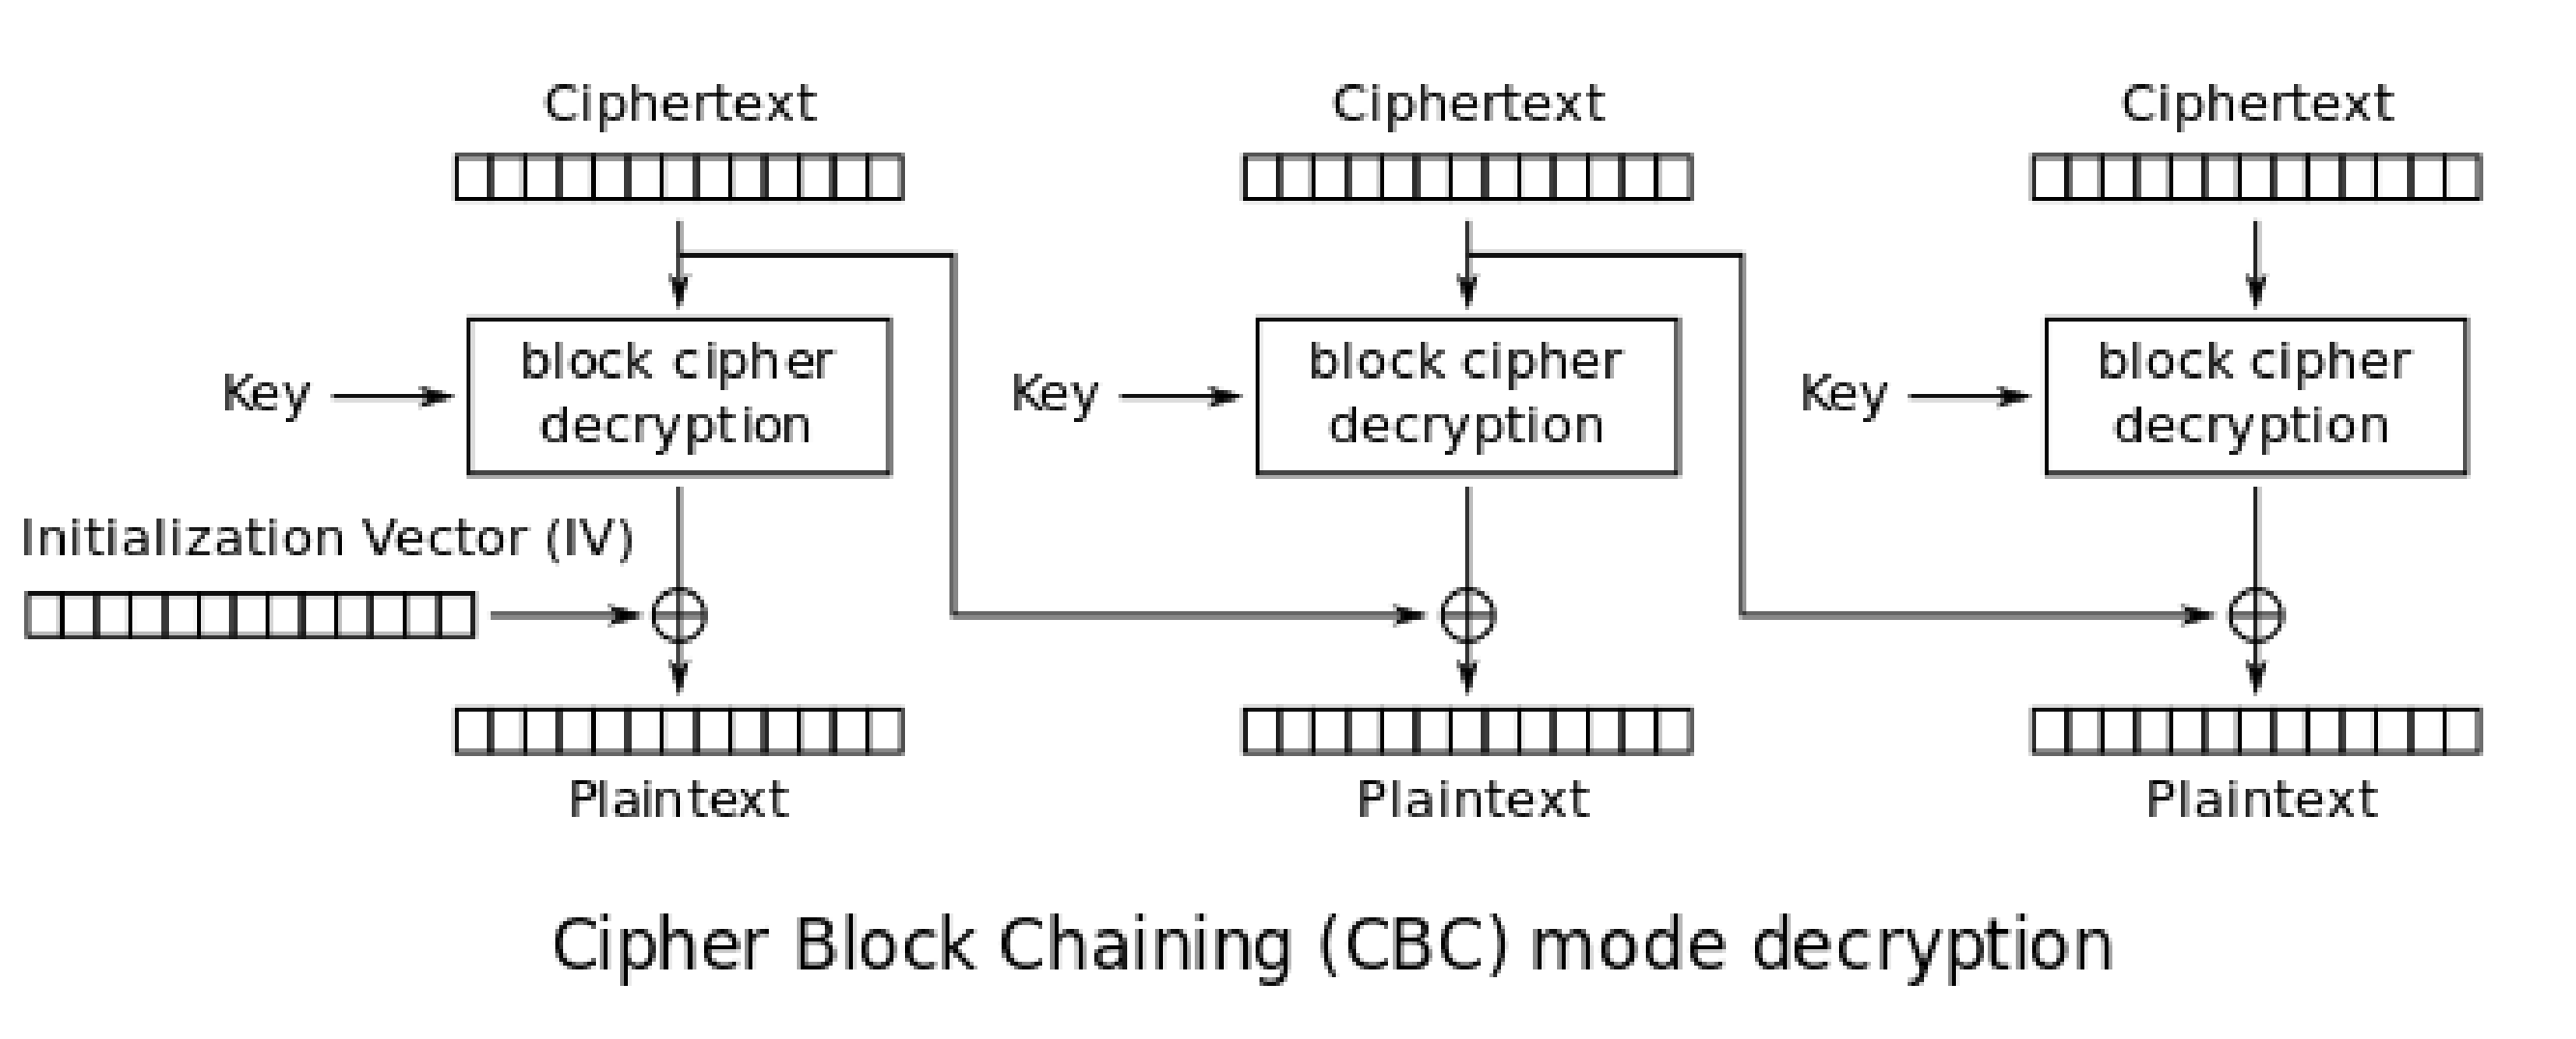 CBC decryption